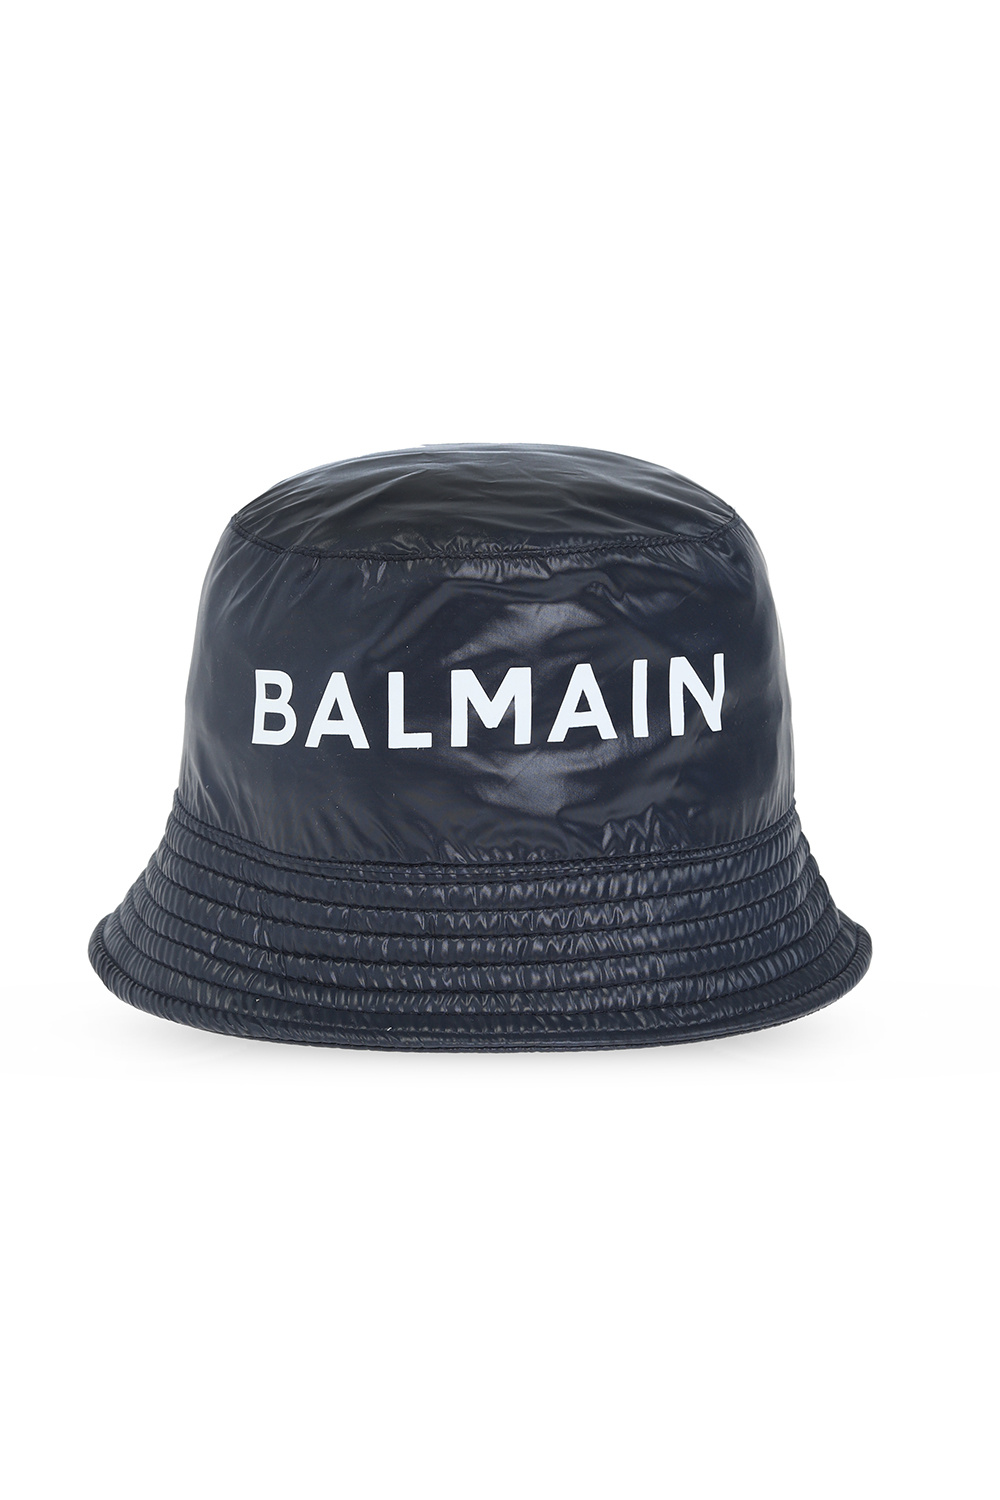 Balmain Kids Rick Owens DRKSHDW Pocket Gilligan bucket hat